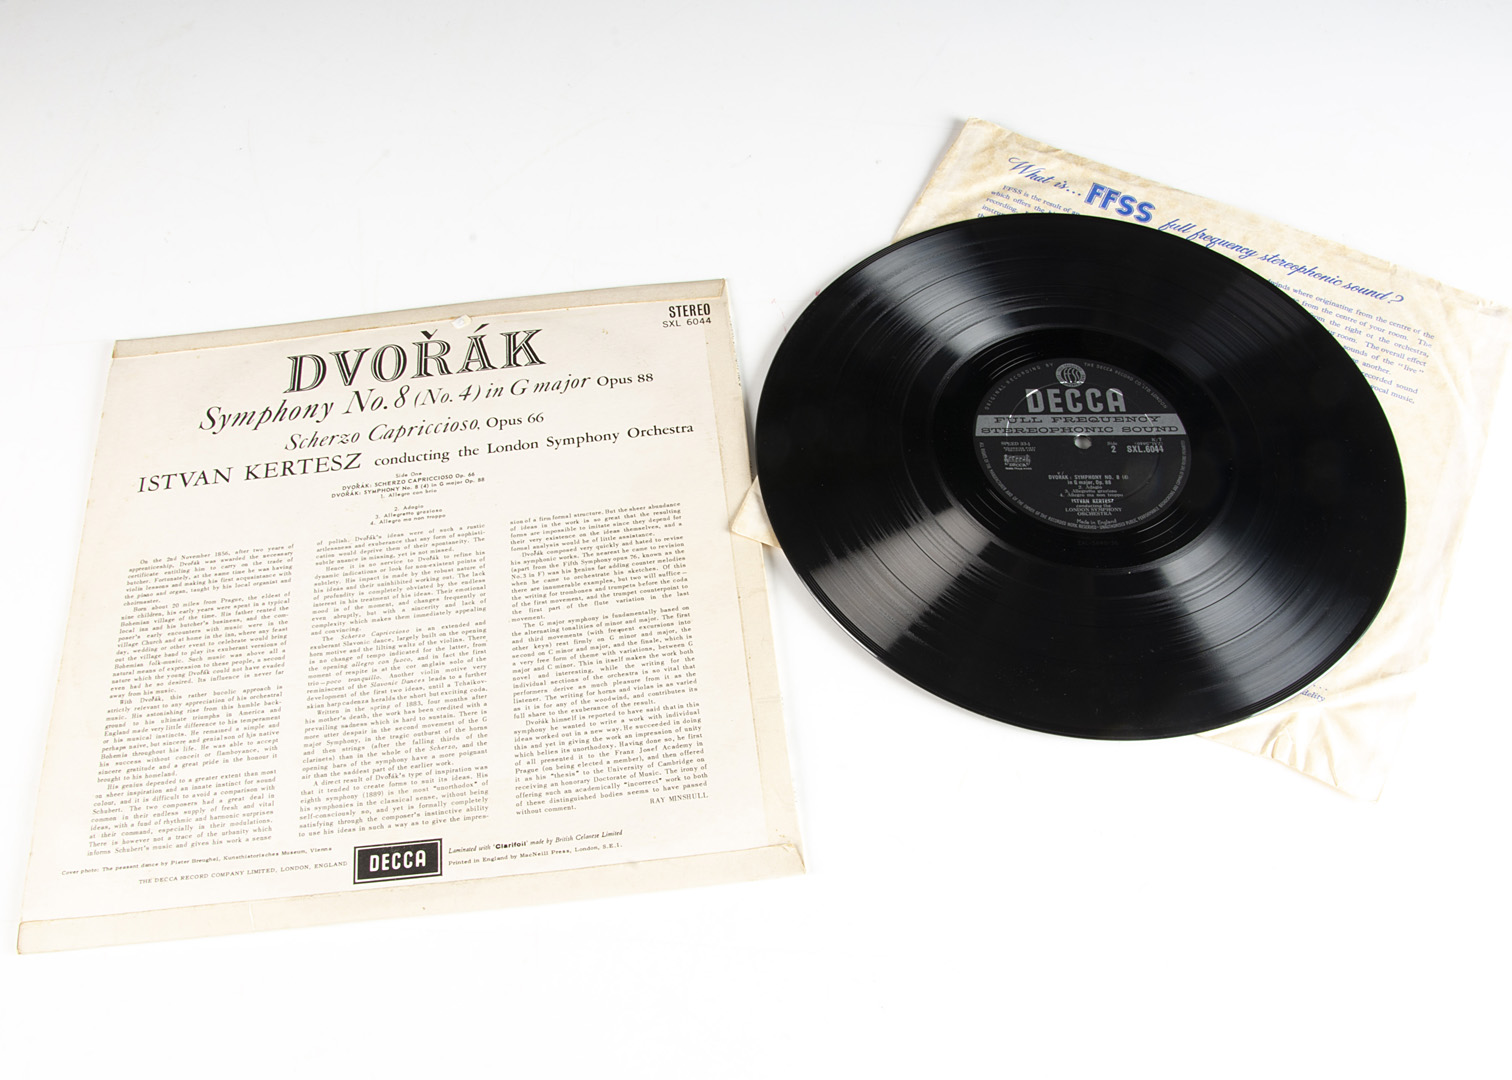 Classical LP / SXL 6044, Dvorak - Symphony No 8 in G major LP - Original UK ED 1 Stereo release 1963 - Image 2 of 2